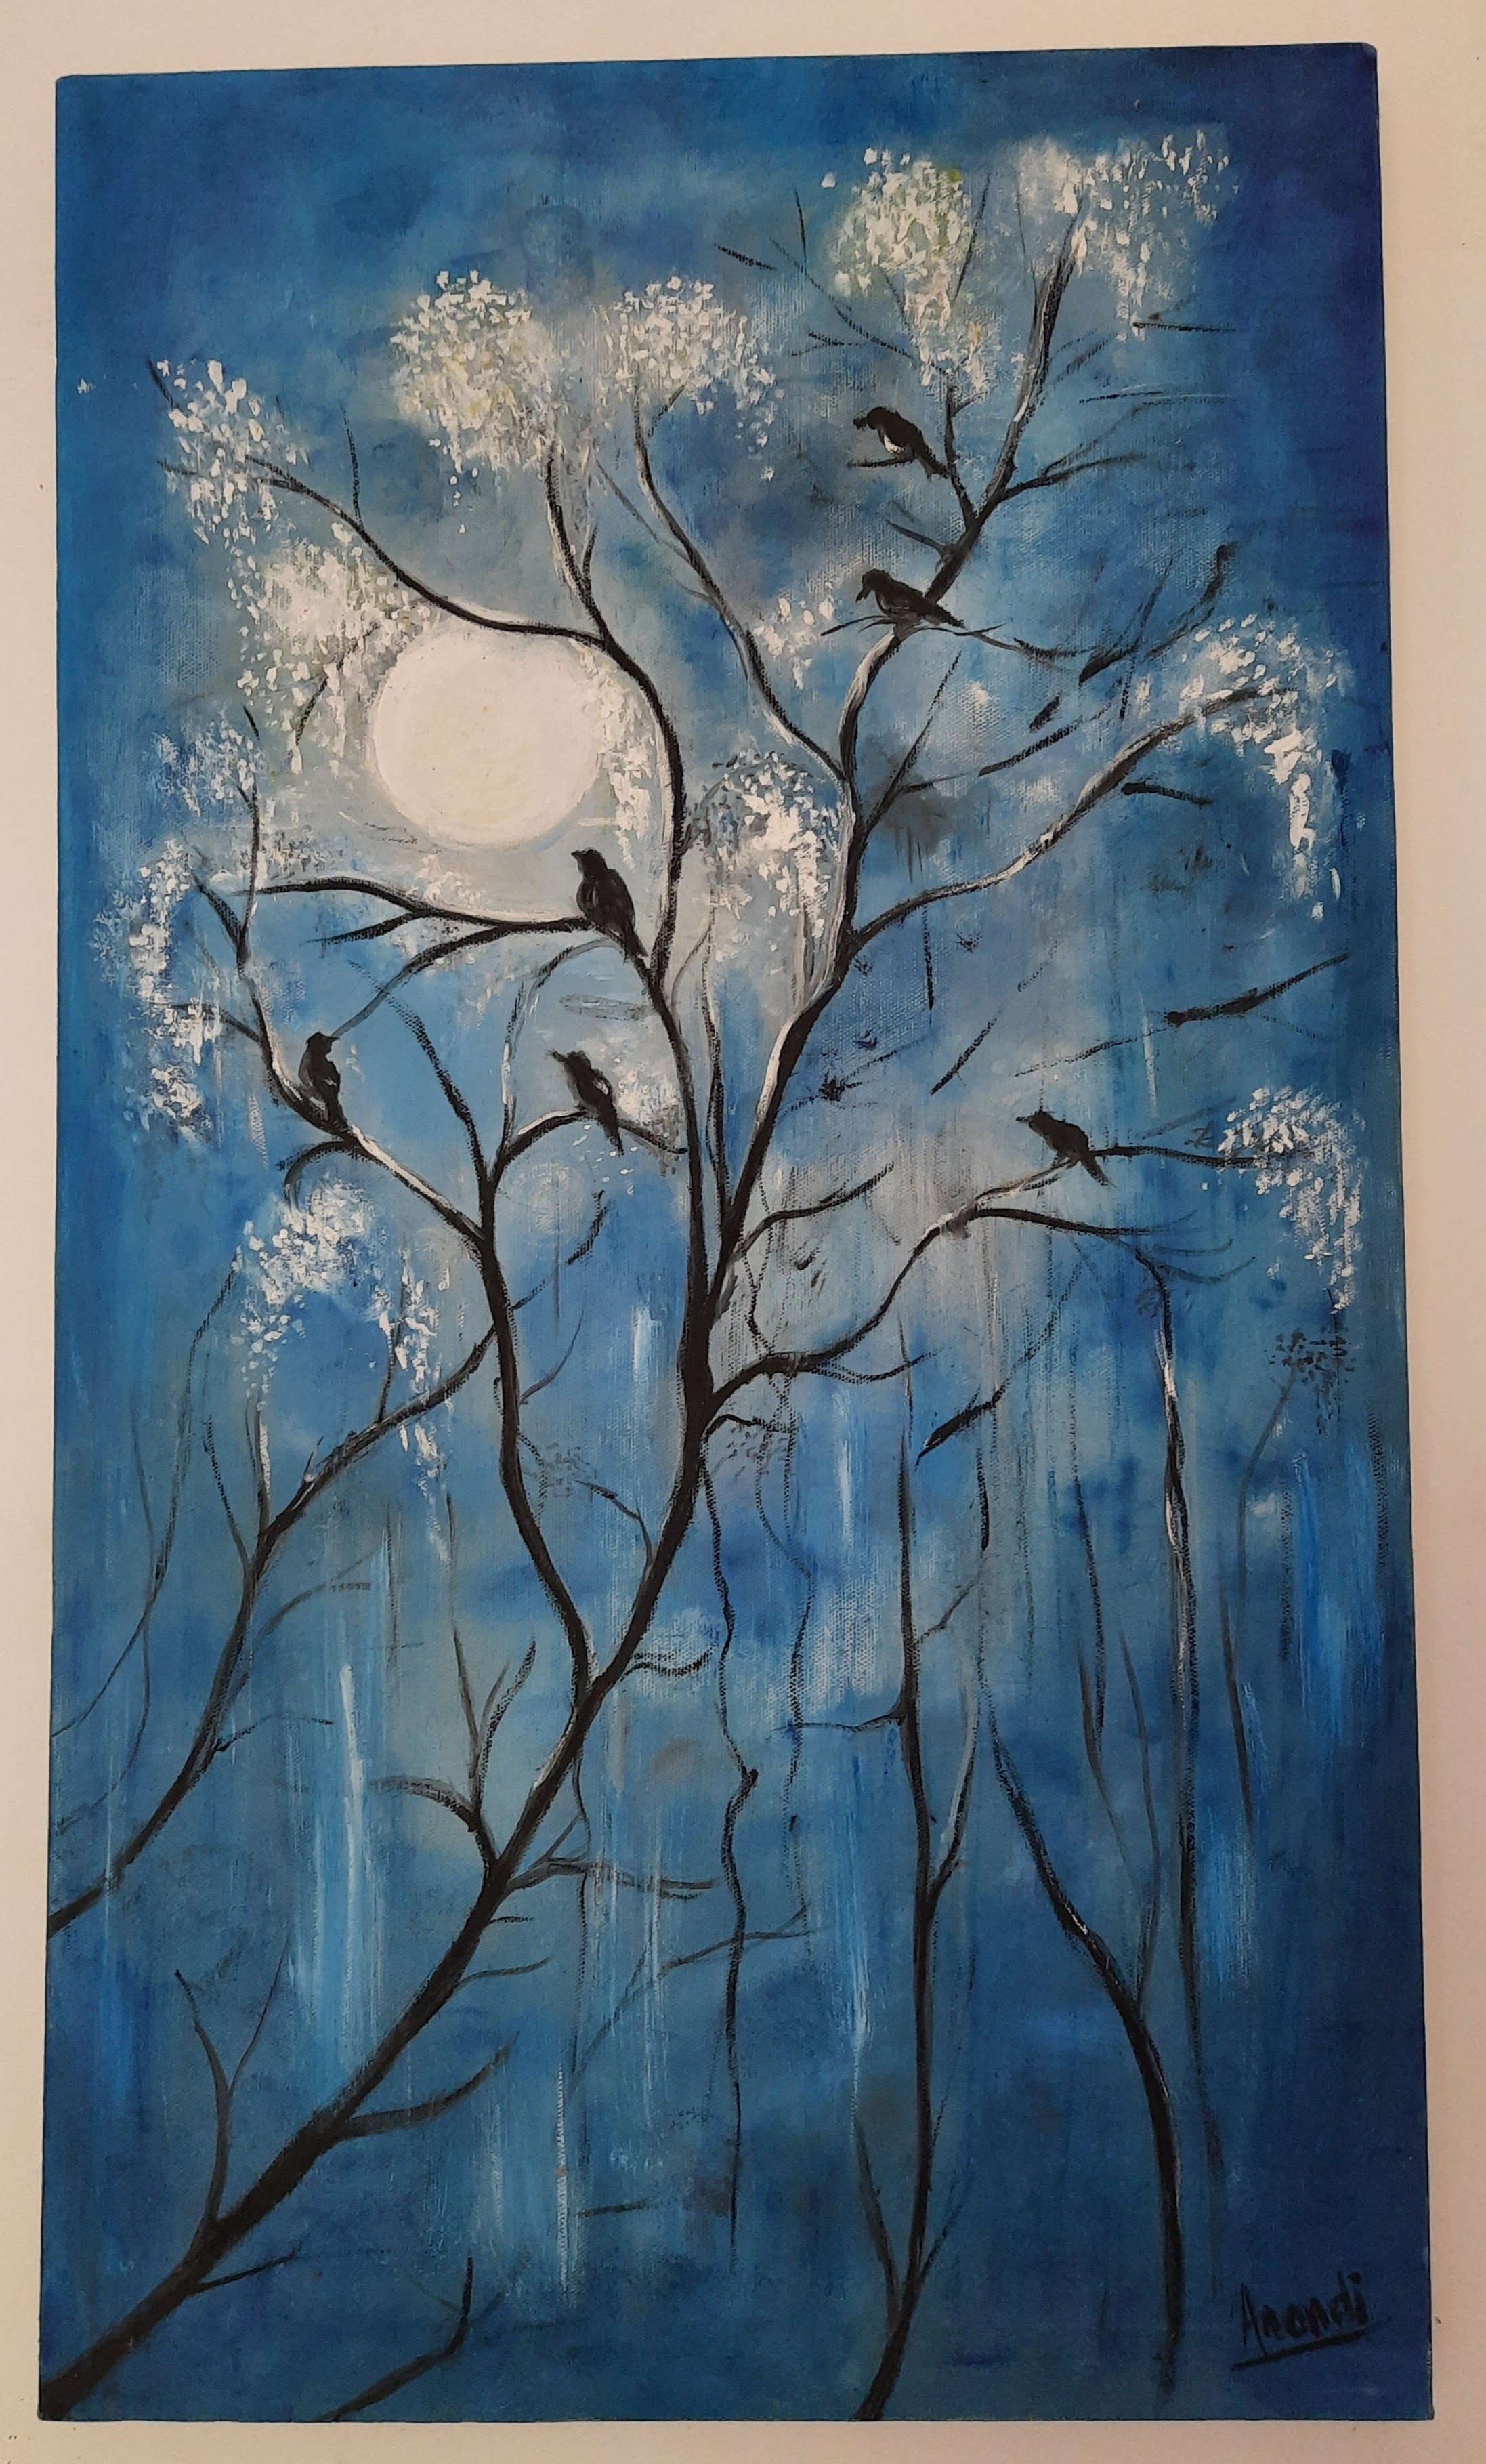 The Blue Moon by Anandi Goonewardene